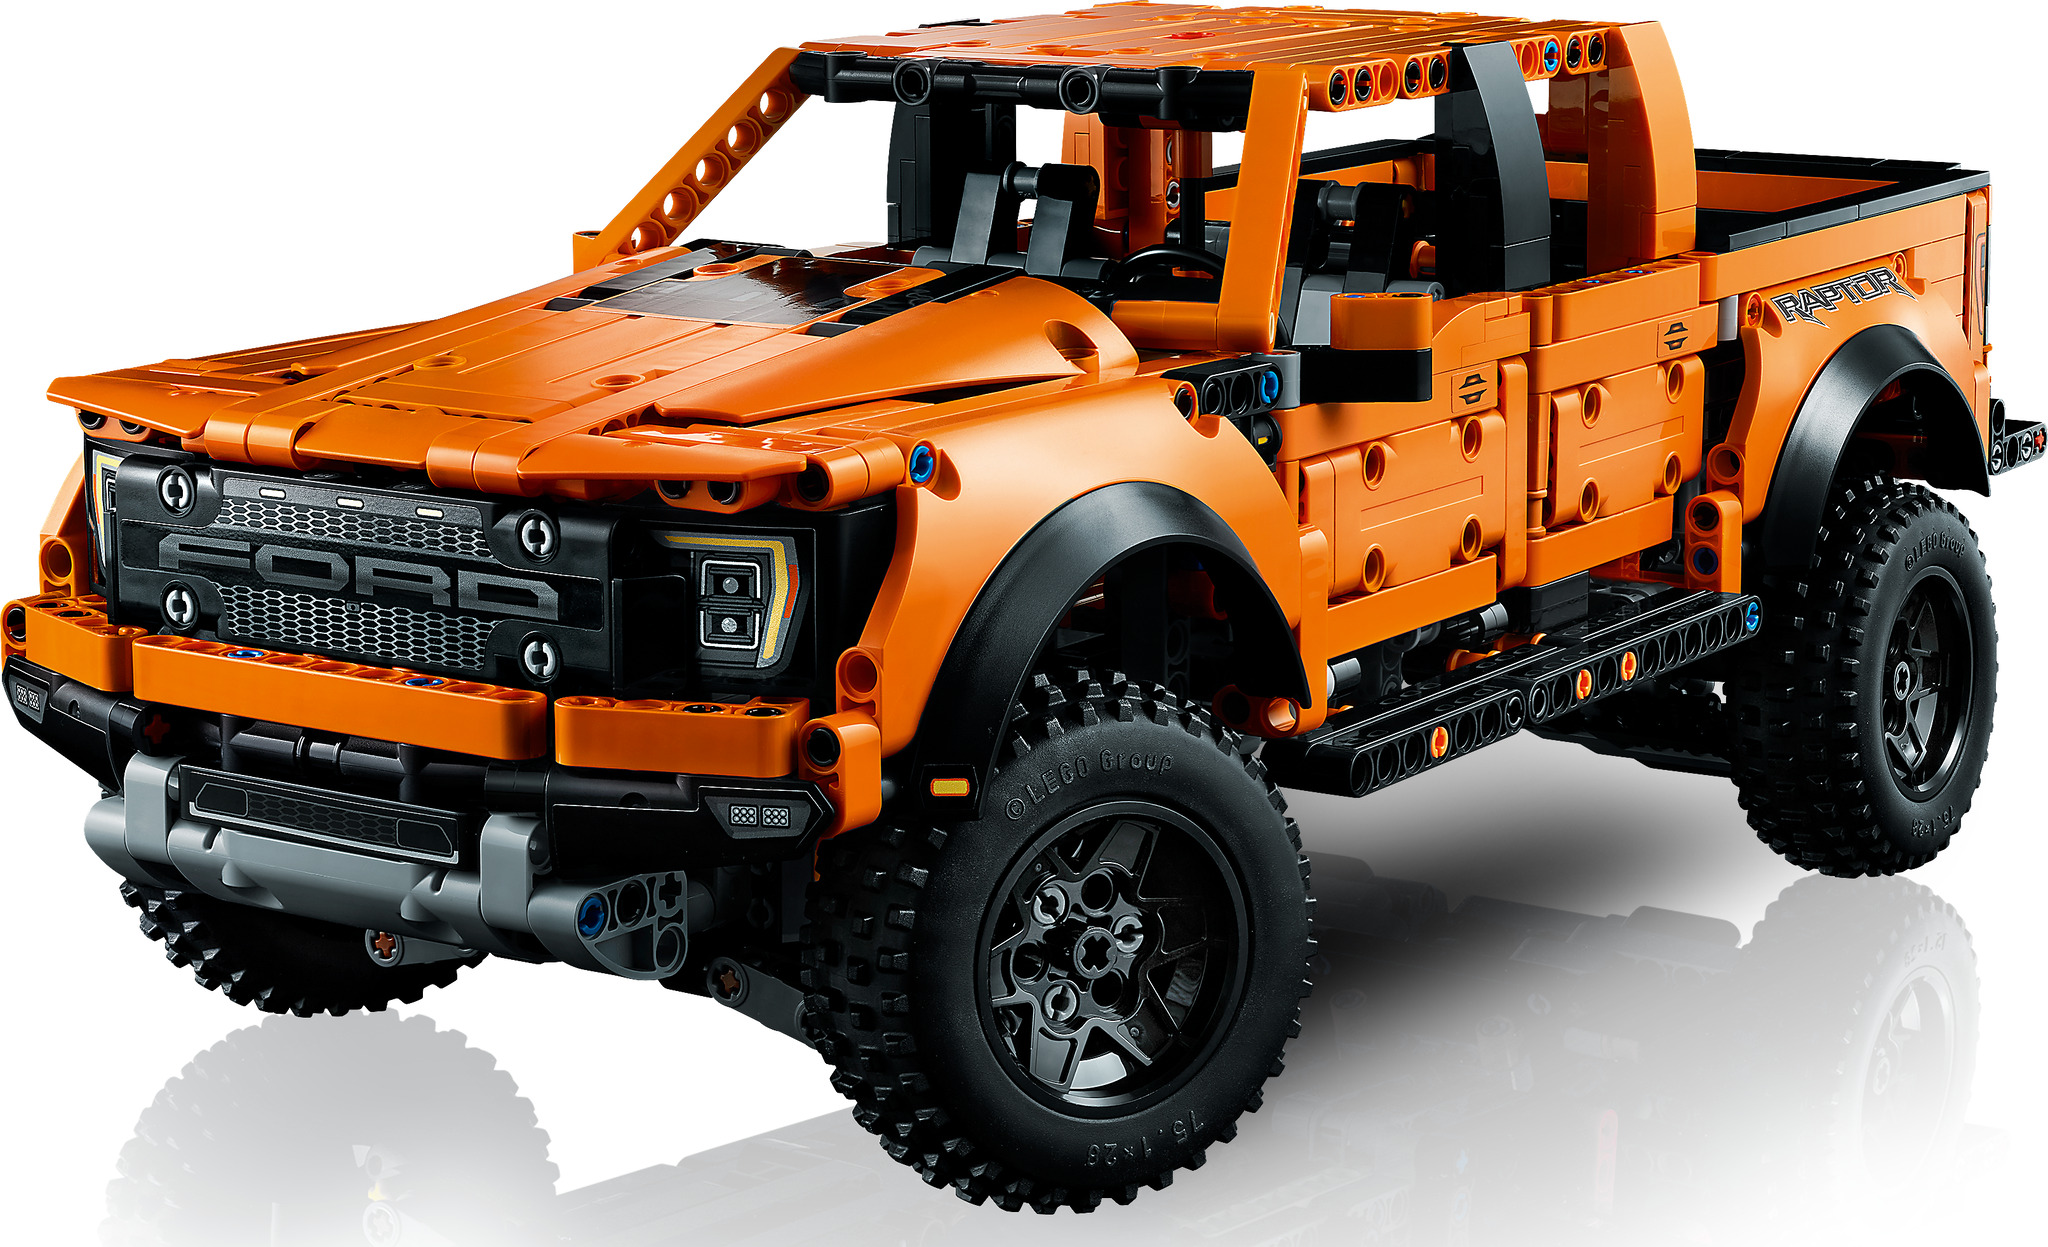 LEGO 42126 Technic Kit Ford F-150 Raptor, Maquette de Voiture a